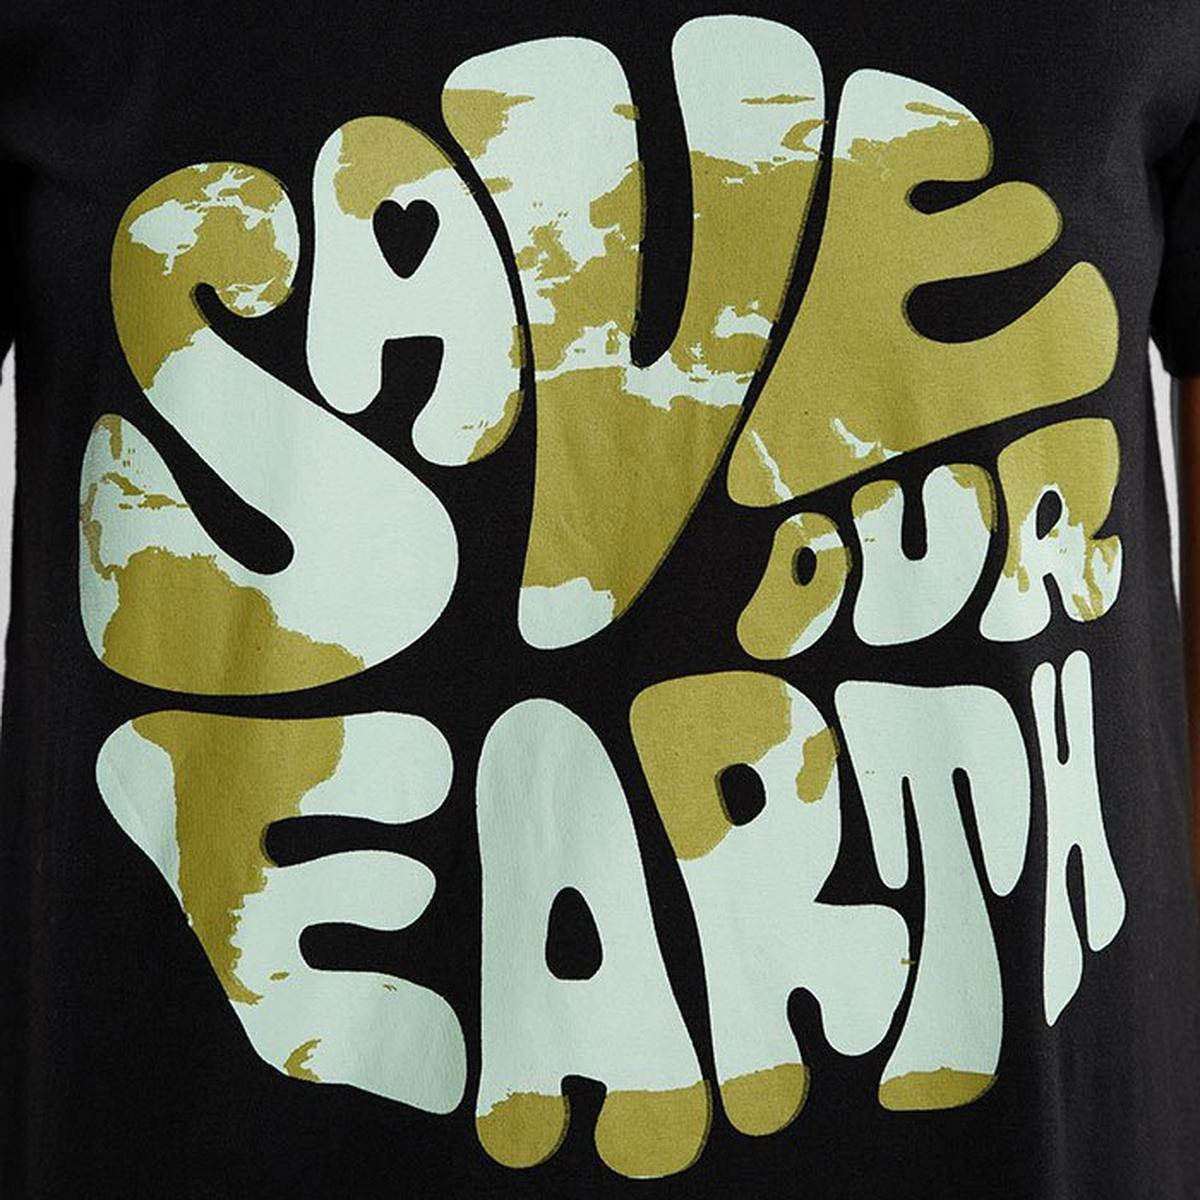 Women's Mysen Save Earth T-Shirt